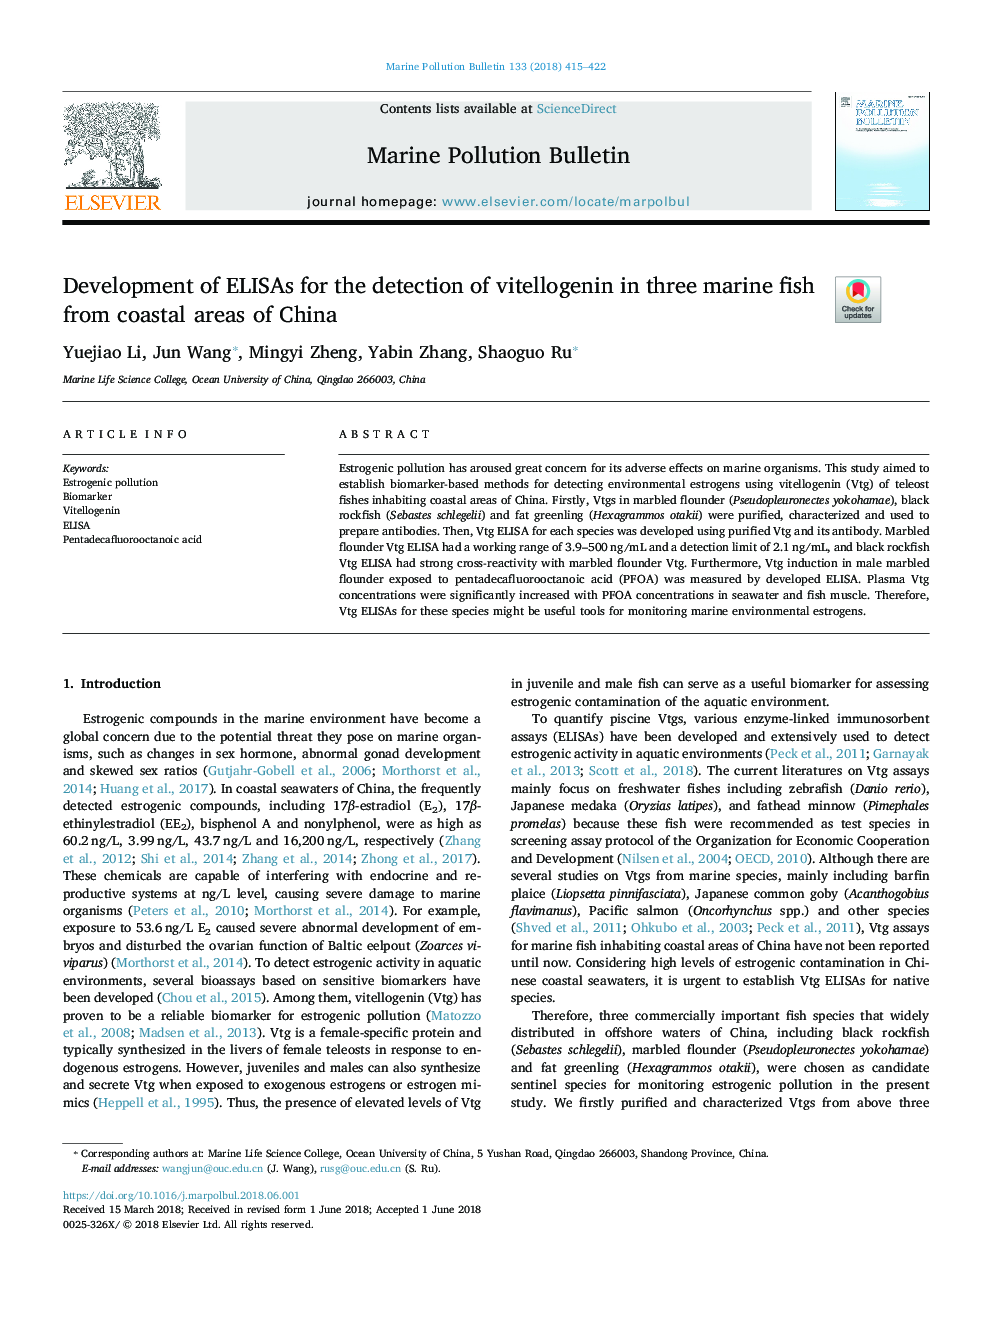 Development of ELISAs for the detection of vitellogenin in three marine fish from coastal areas of China